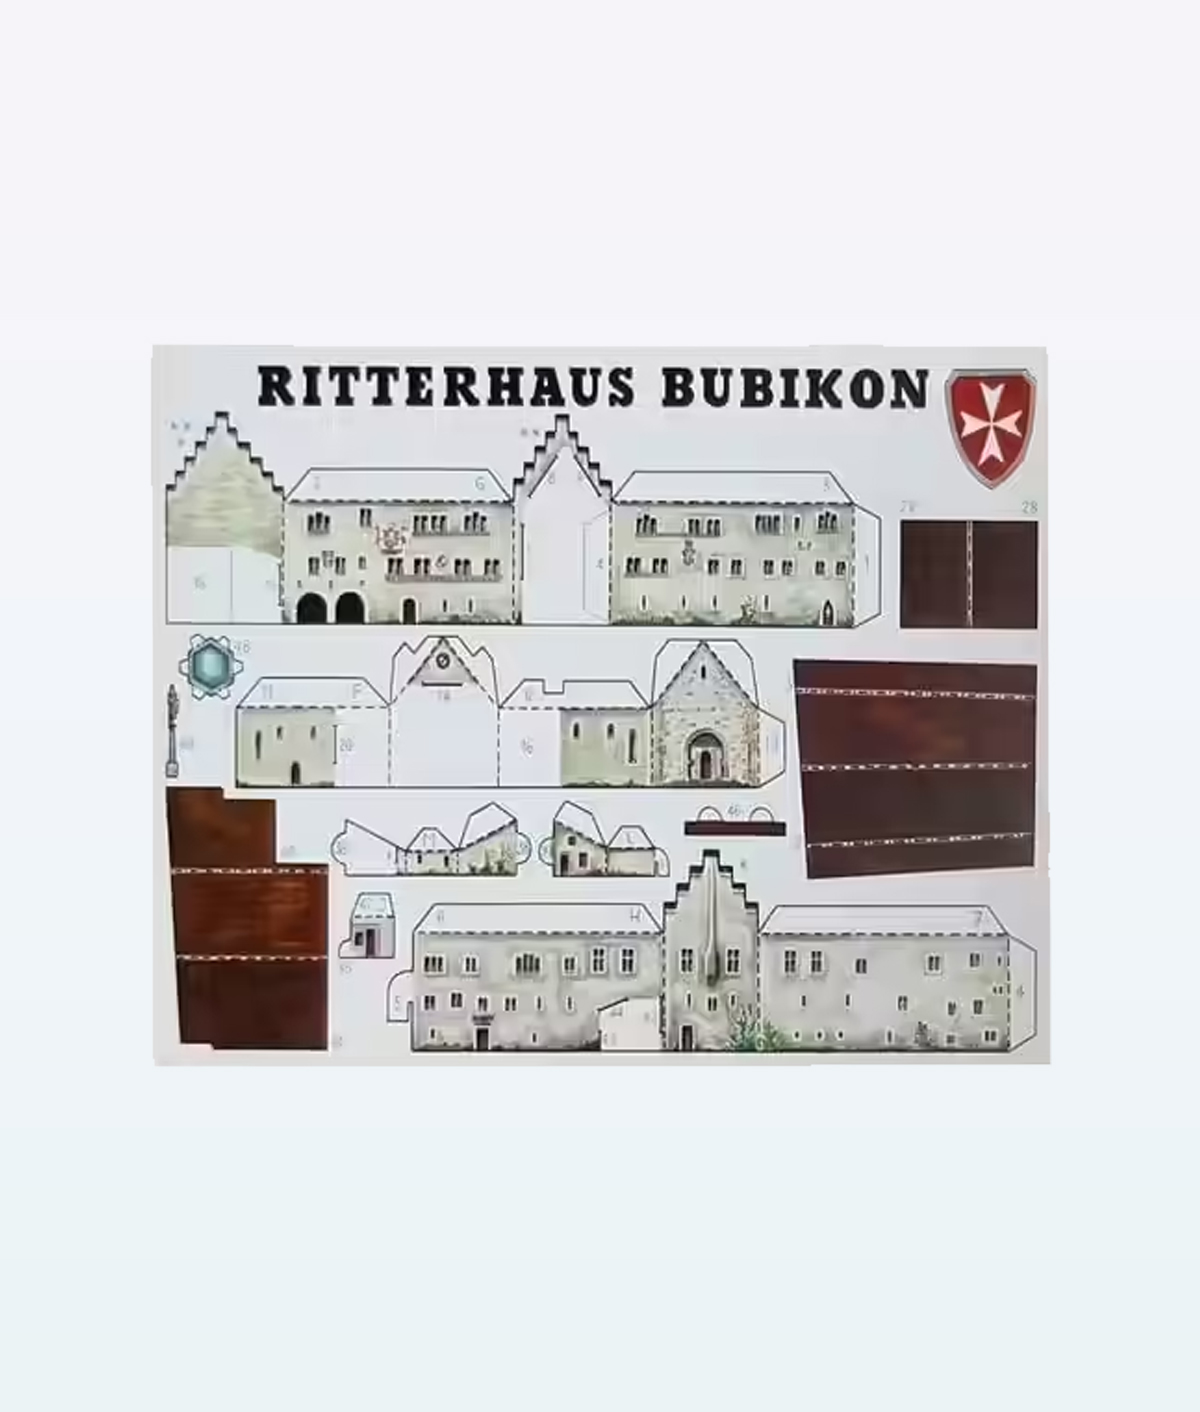 Rittrehaus-Bubikon